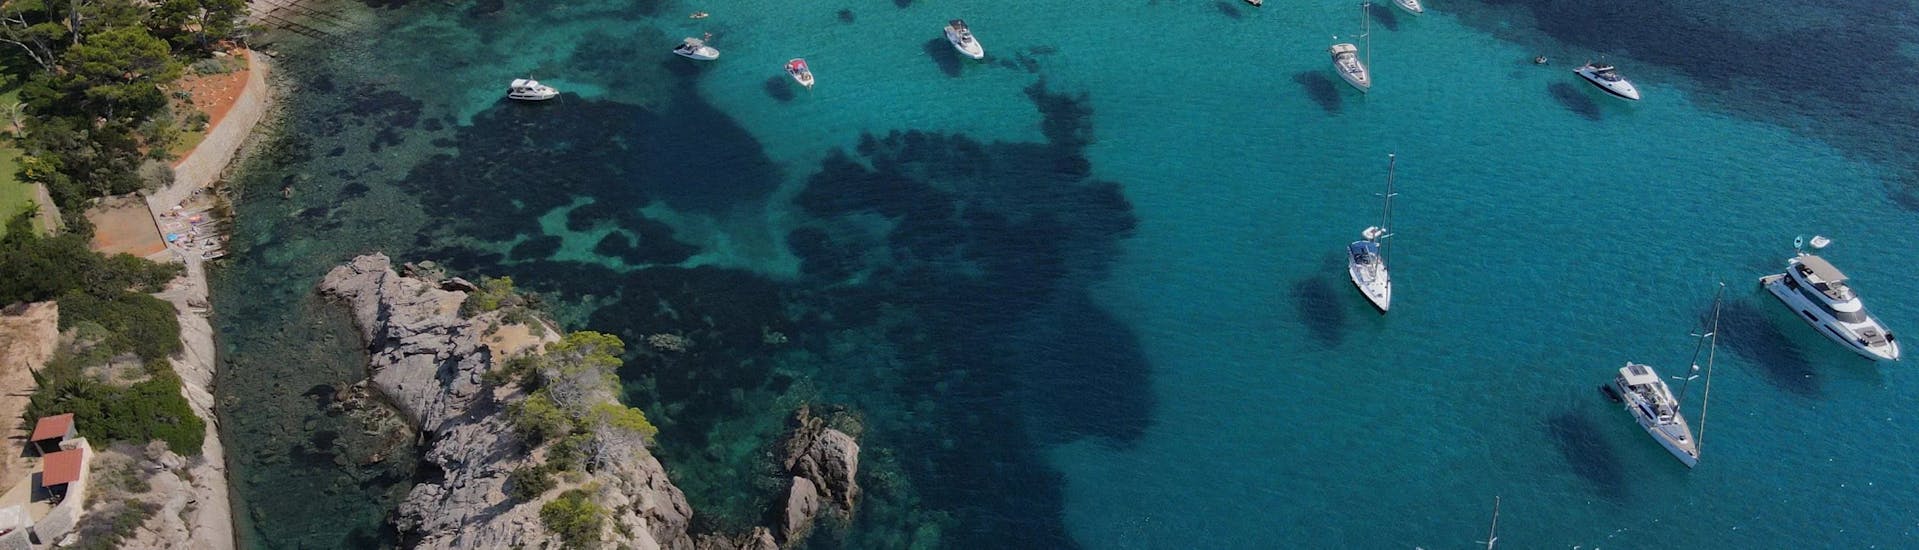 Alquiler de barco en Santa Eulària, Ibiza (hasta 8 personas).